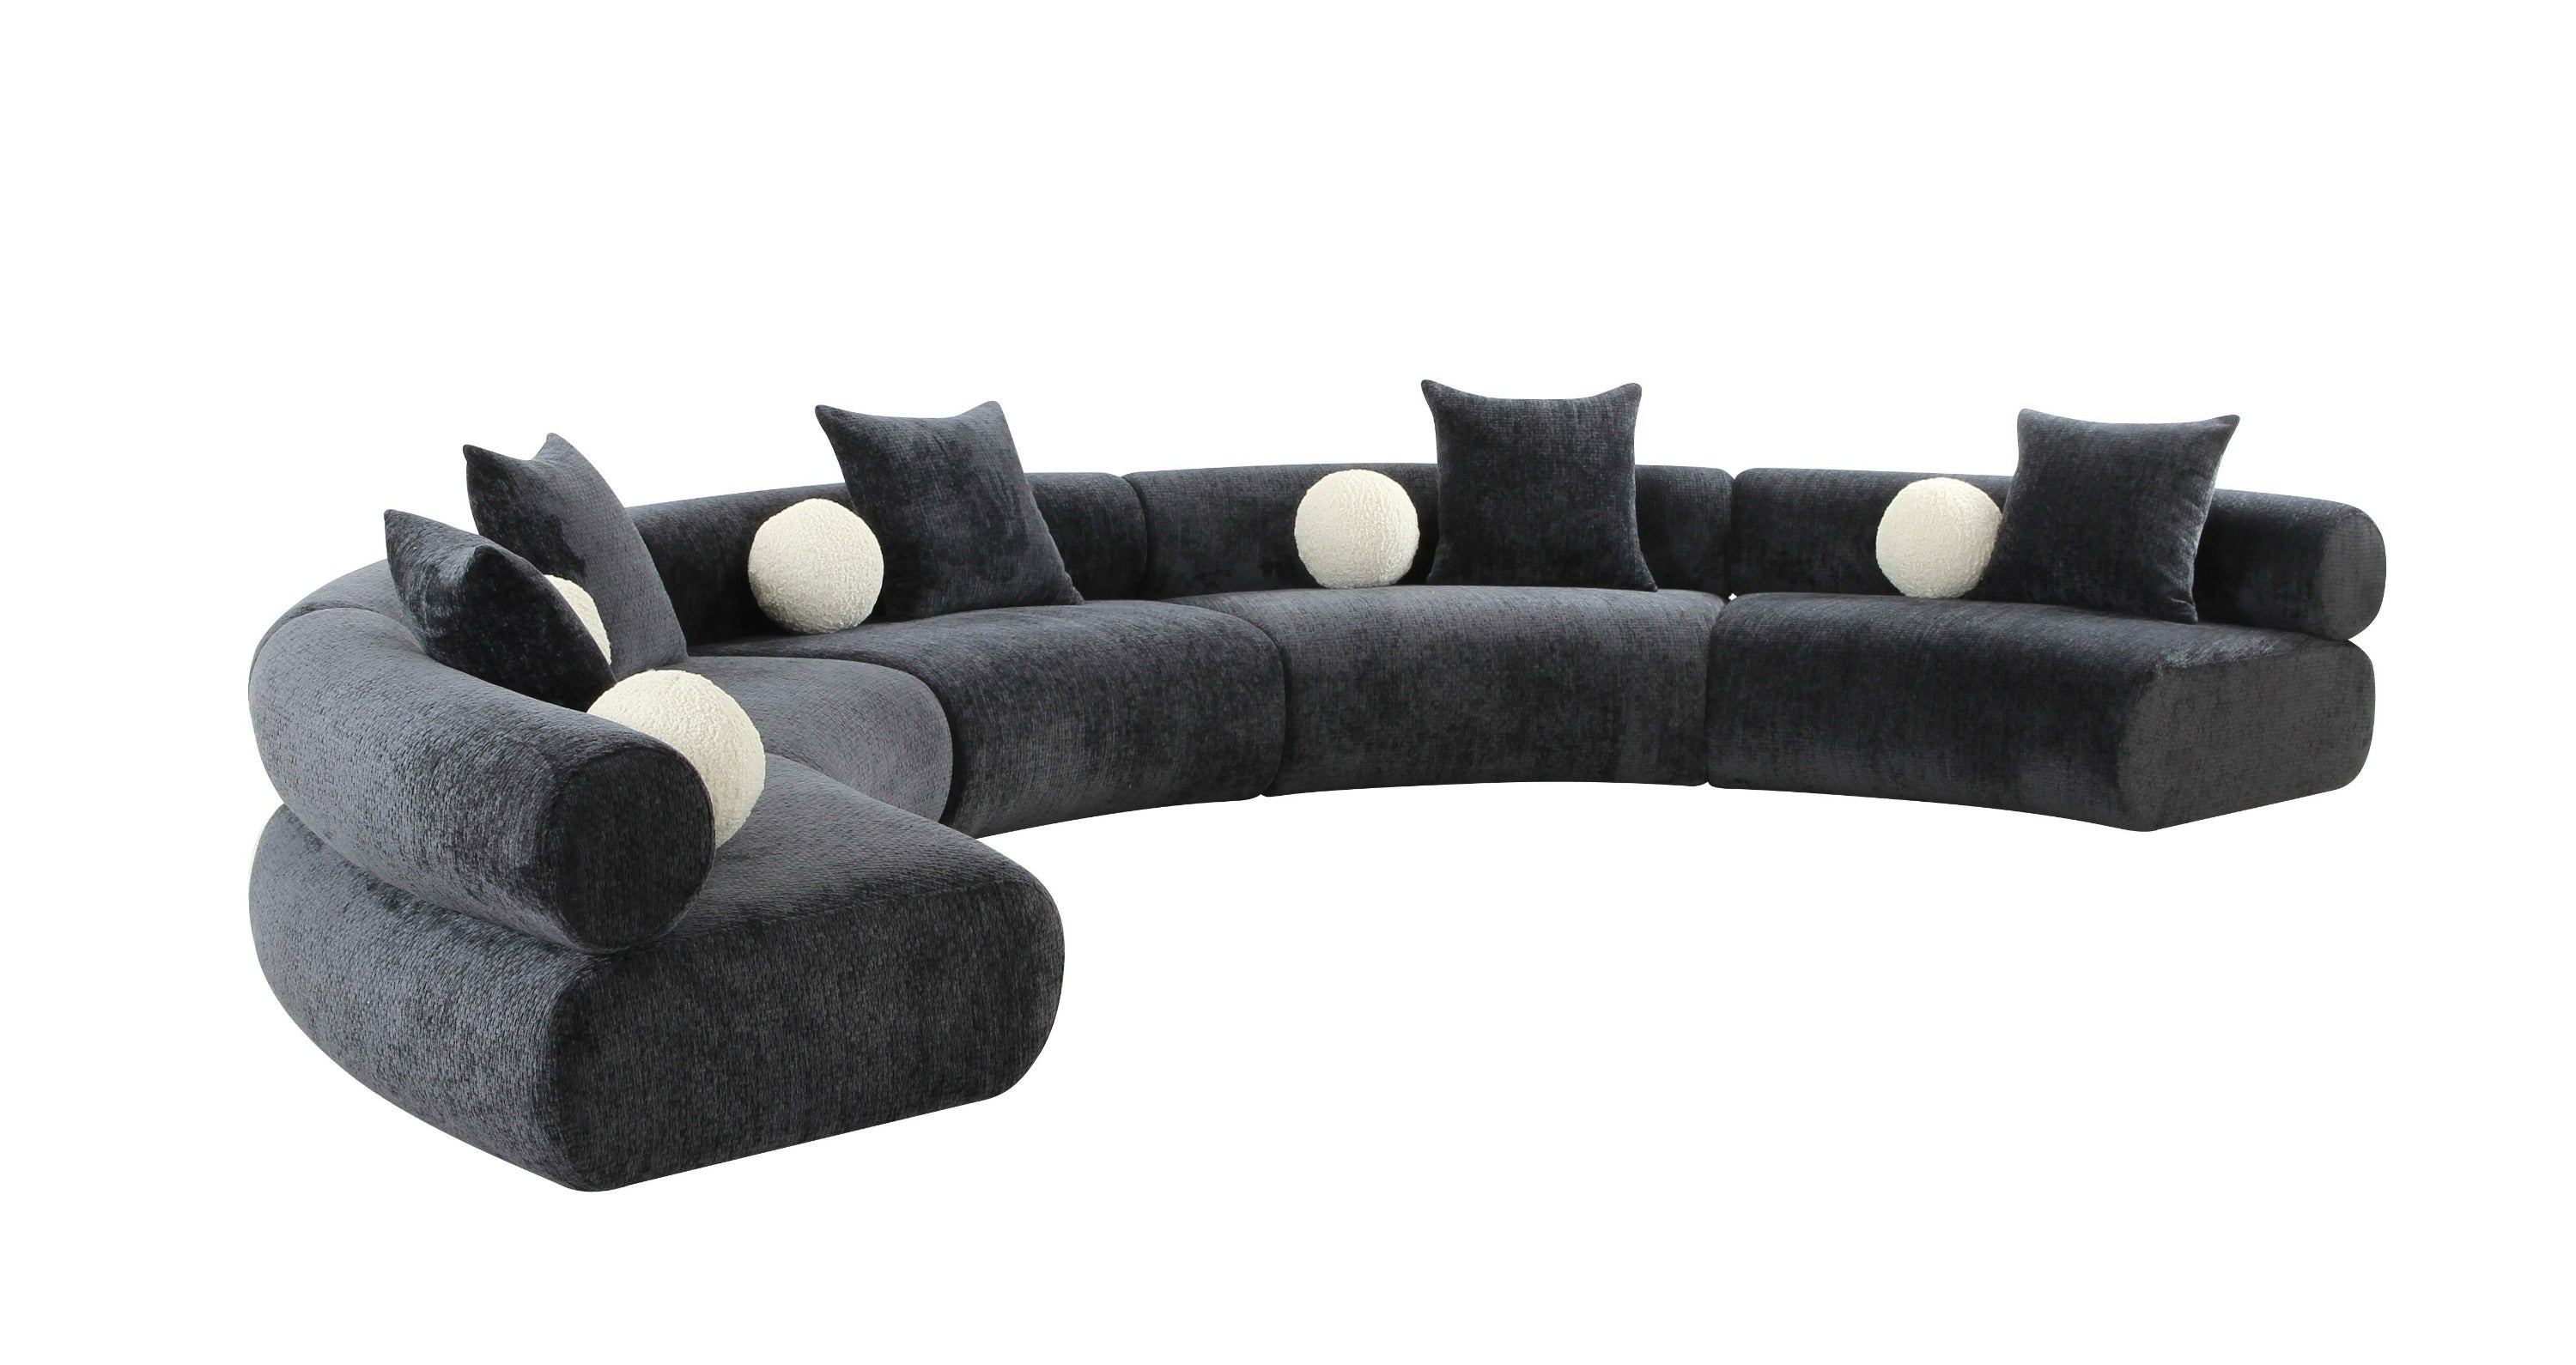 Divani Casa Simpson - Contemporary Fabric Curved Modular Sectional Sofa with Throw Pillows-Sectional Sofa-VIG-Wall2Wall Furnishings